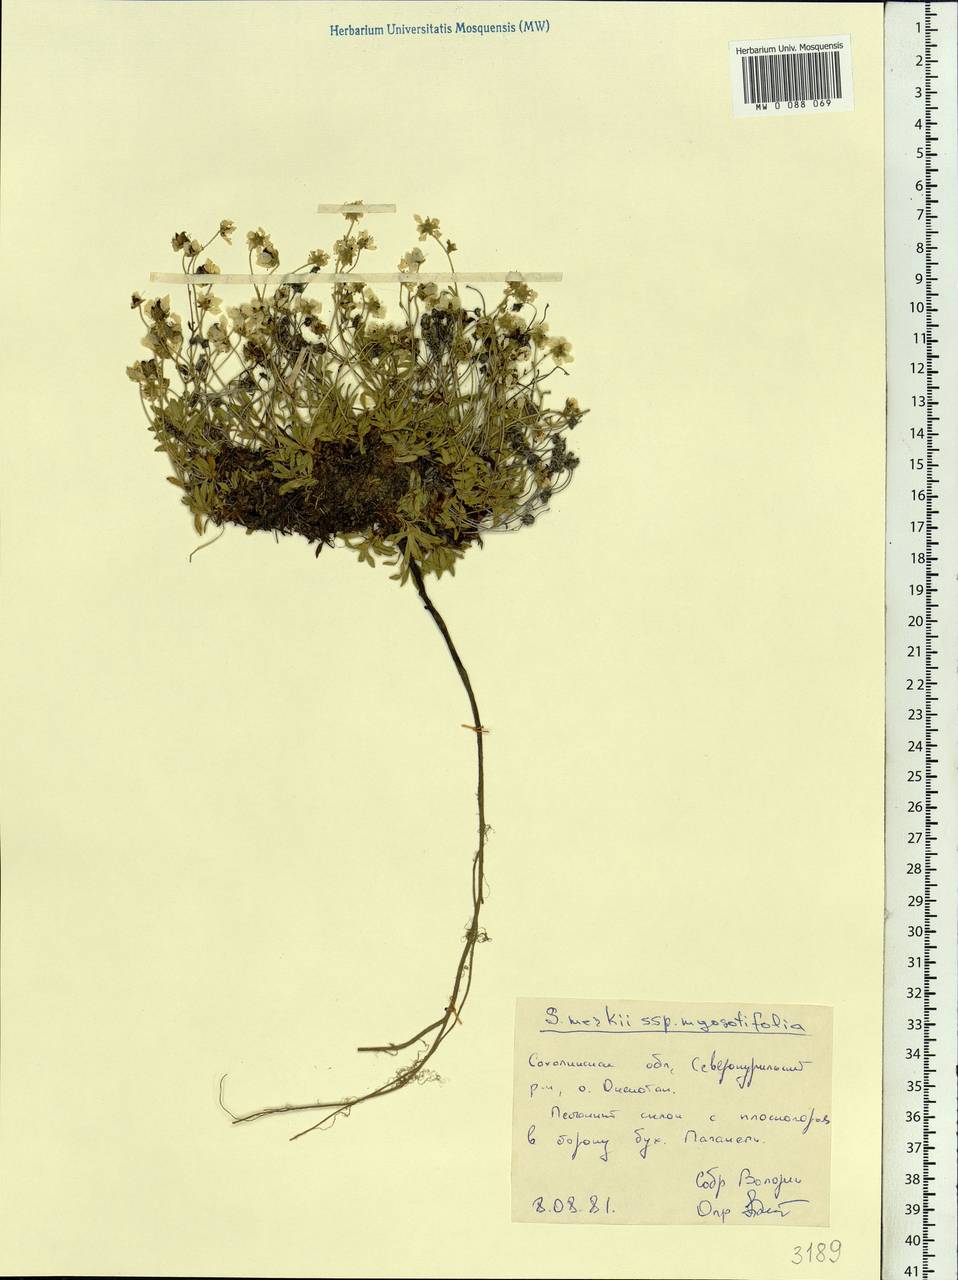 Micranthes merkii subsp. merkii, Siberia, Russian Far East (S6) (Russia)